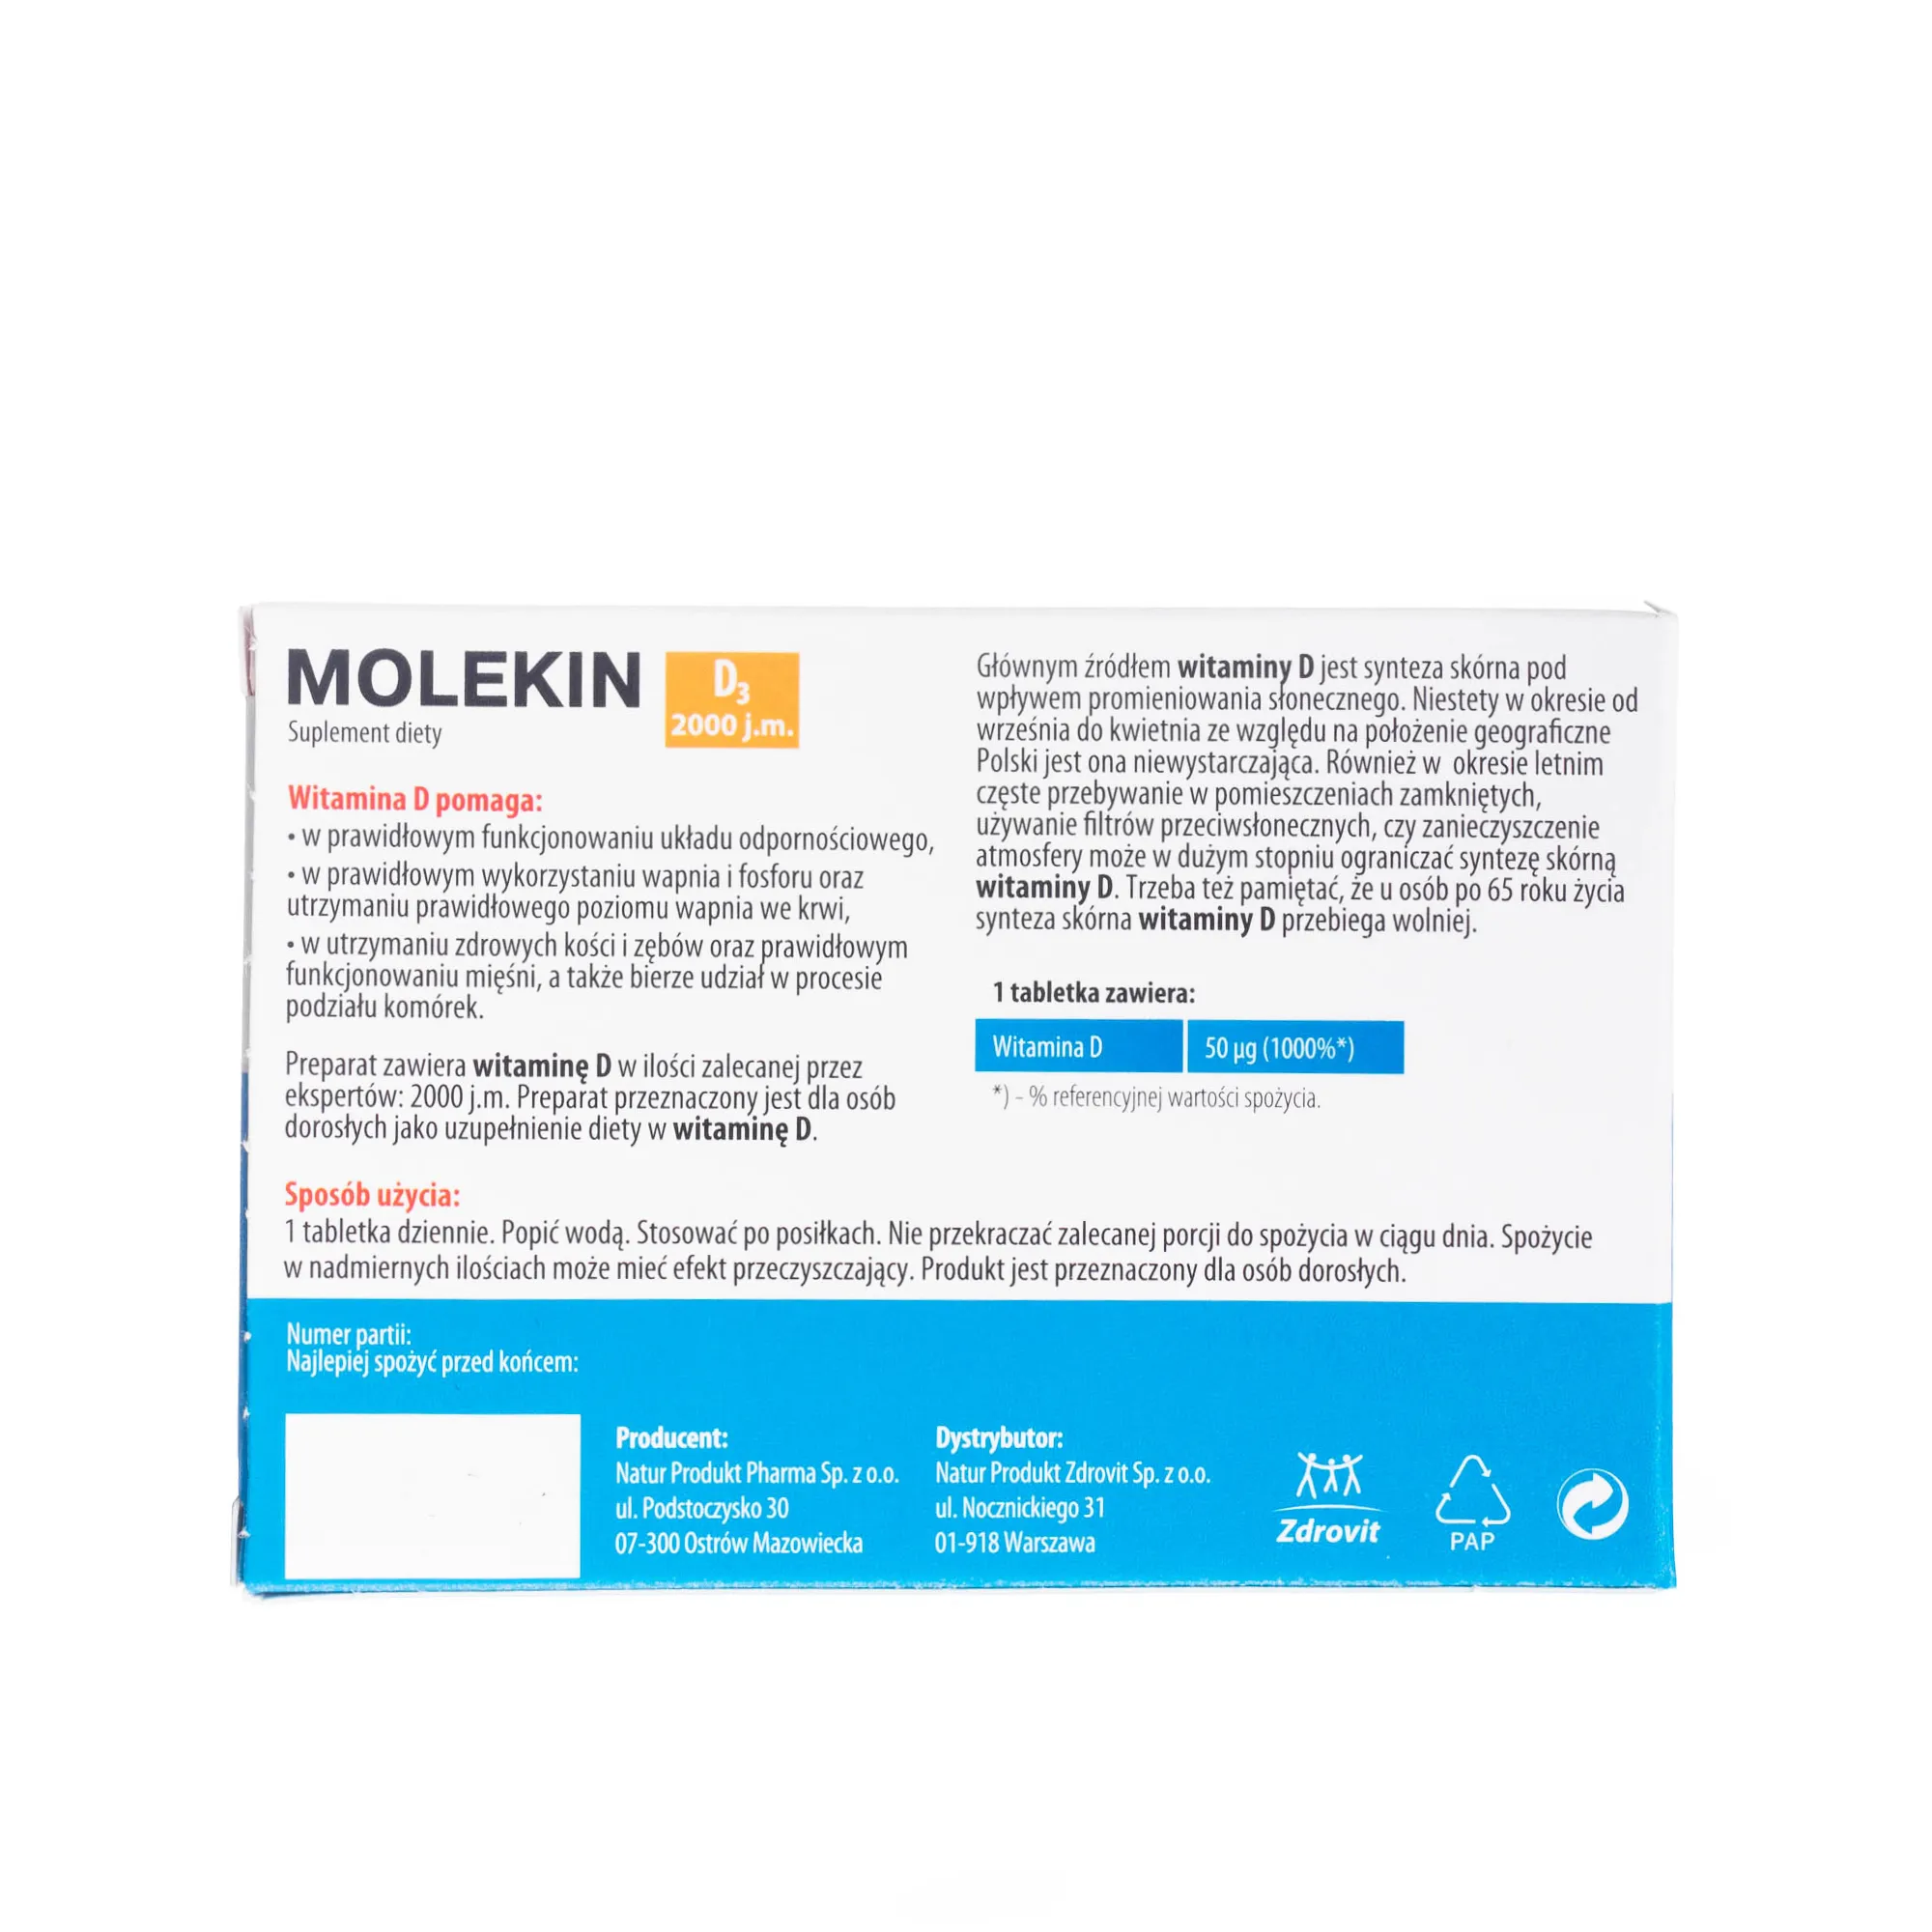 Molekin D3 2000 j.m, suplement diety, 60 tabletek powlekanych 